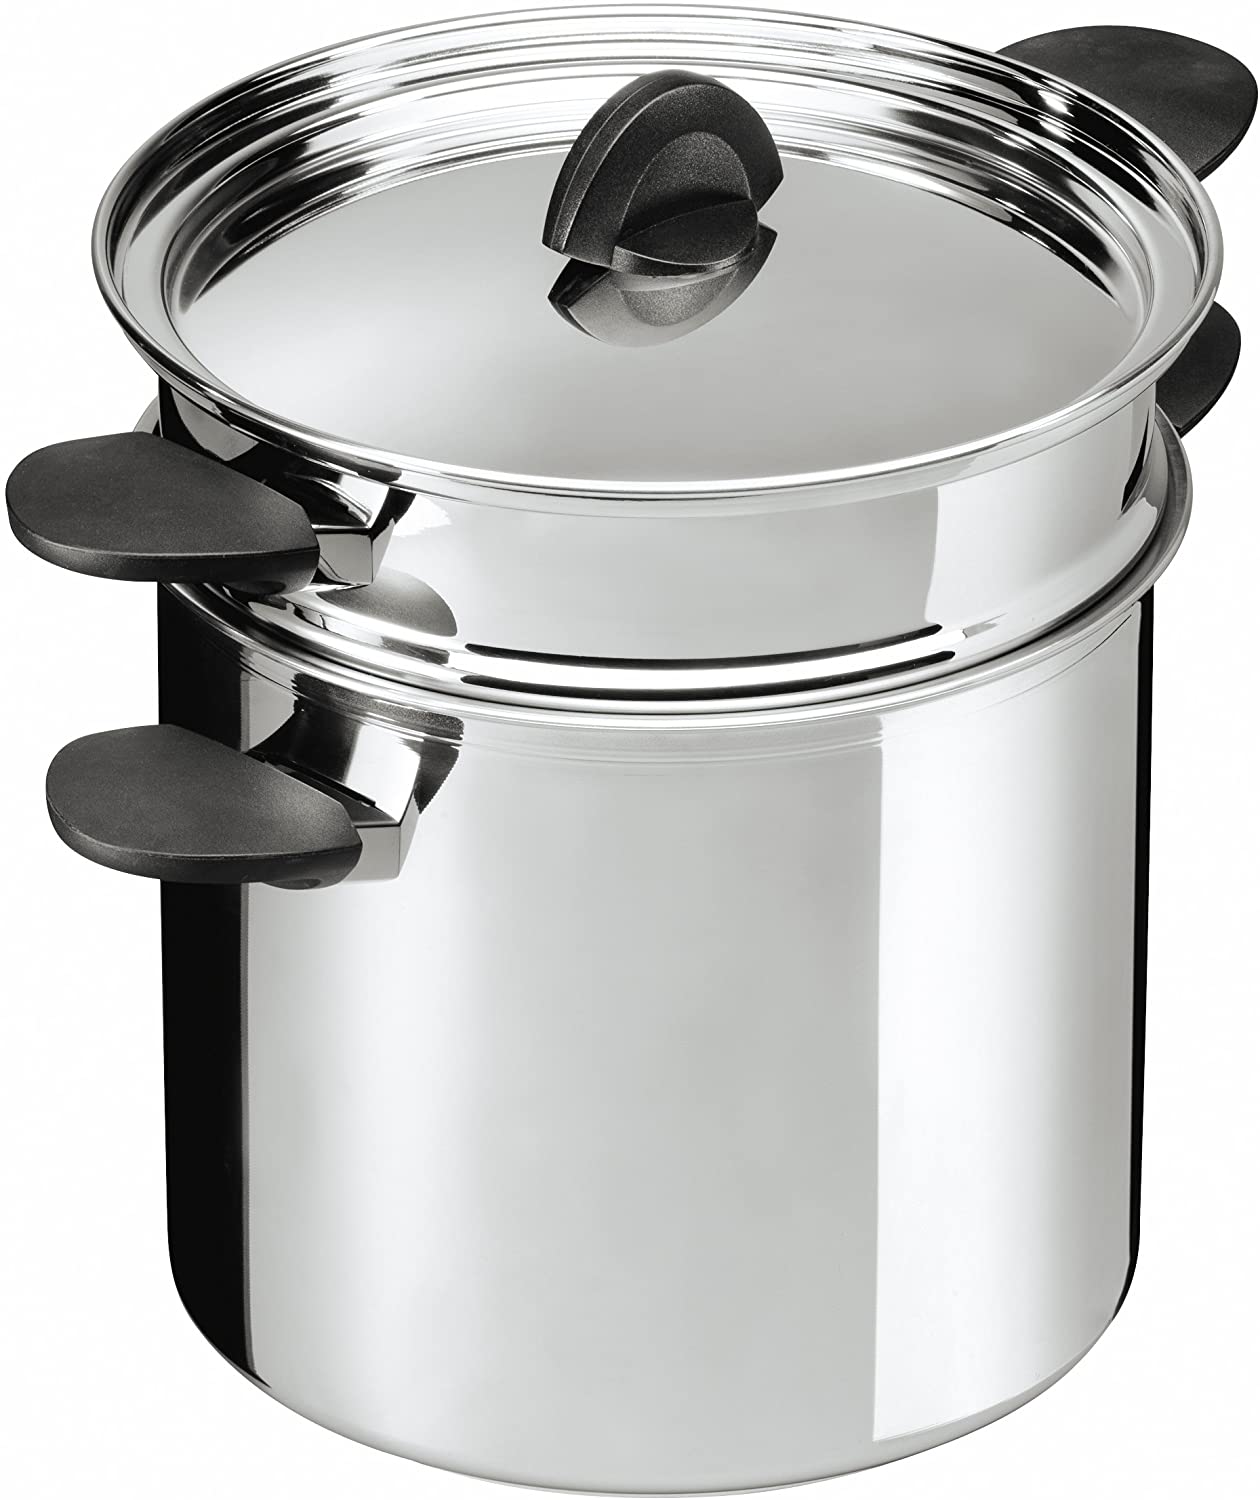 KUHN RIKON Luna 37308 Cookware Saucepan Stainless Steel Induction Pasta Pot with Insert 6.5 Litres / 22 cm